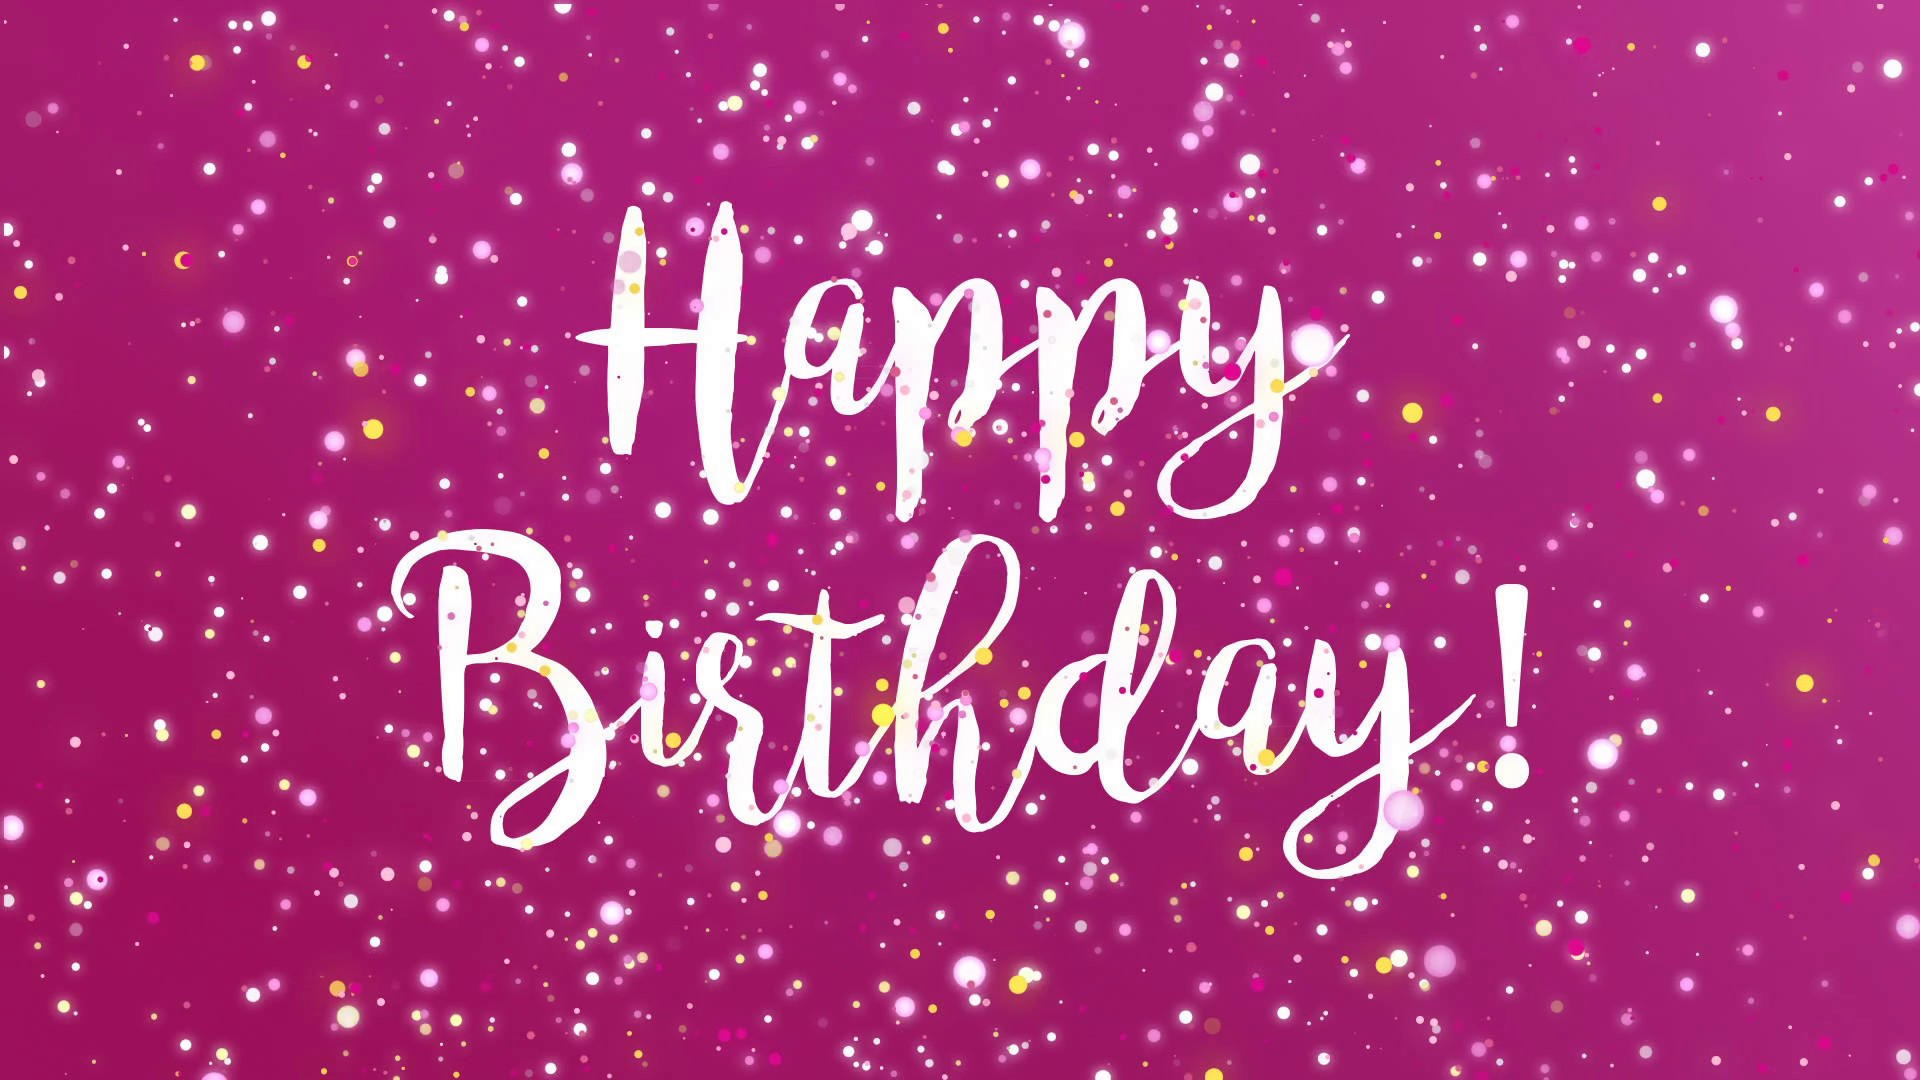 Sparkly Happy Birthday Greeting Card Video Animation - Happy Birthday Pink  Theme - 1920x1080 Wallpaper 